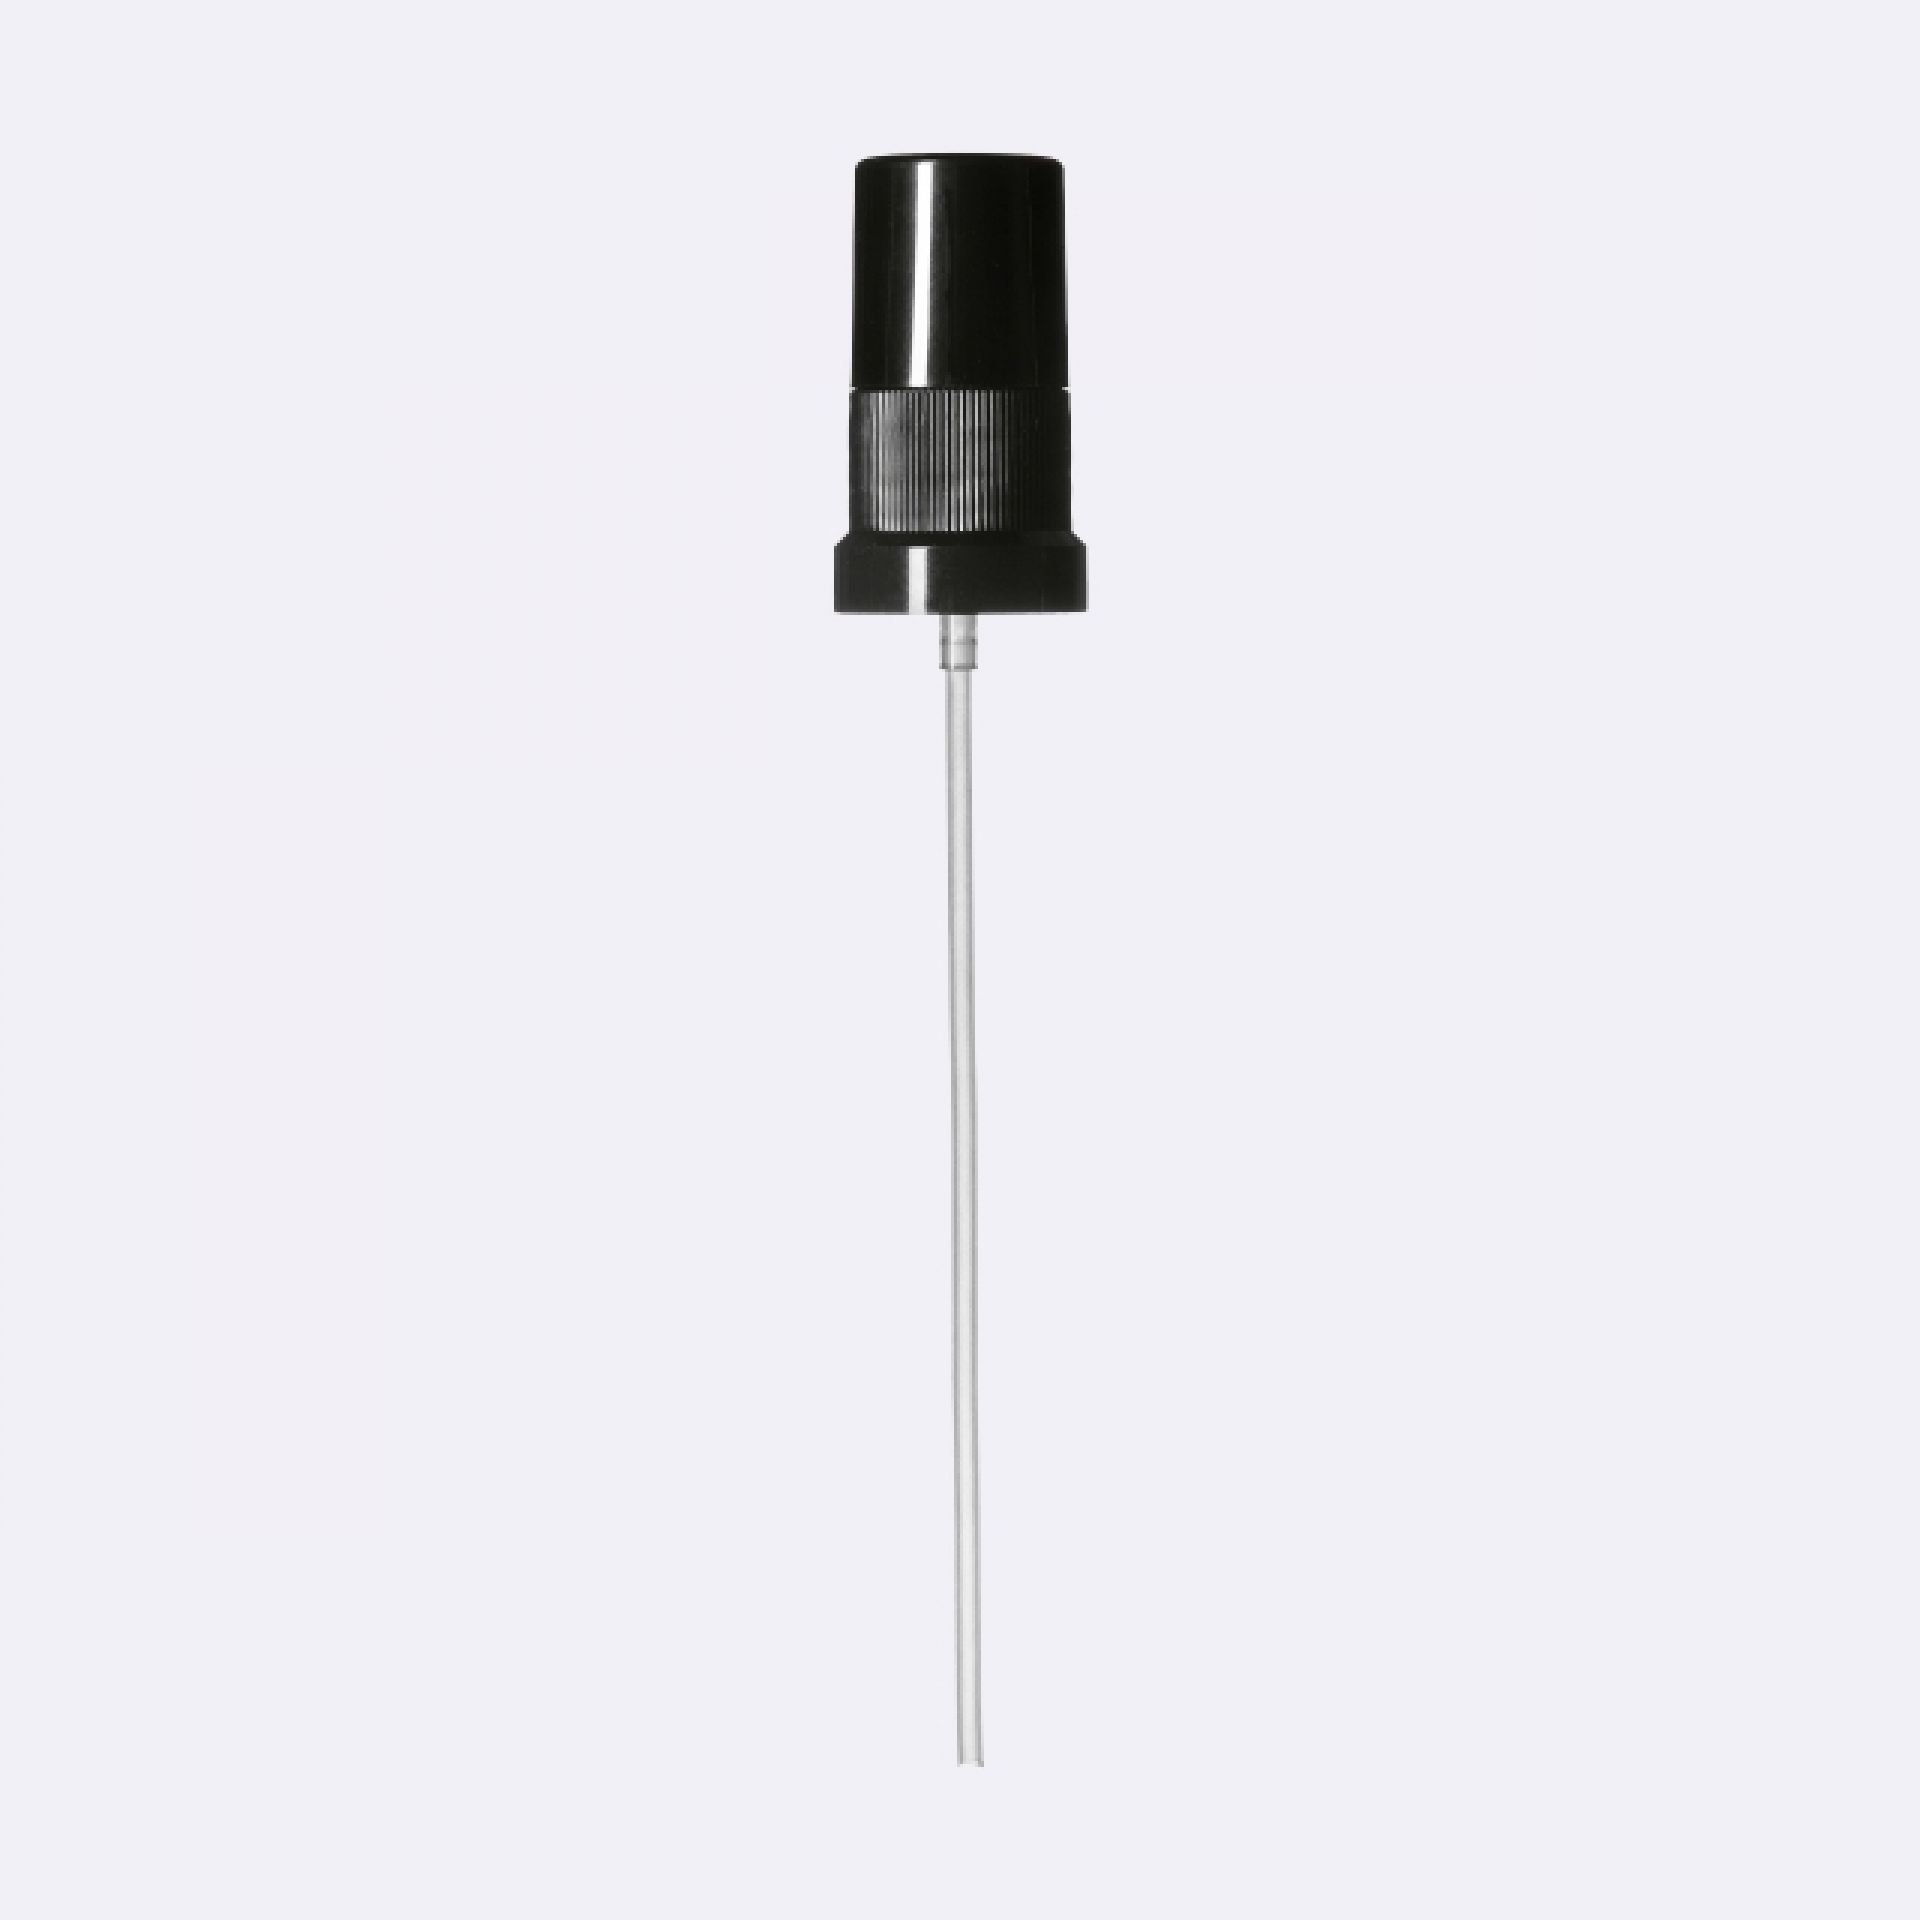 Mist sprayer Classic, DIN18, PP, black, ribbed, dose 0.10 ml, black overcap (Orion 100)